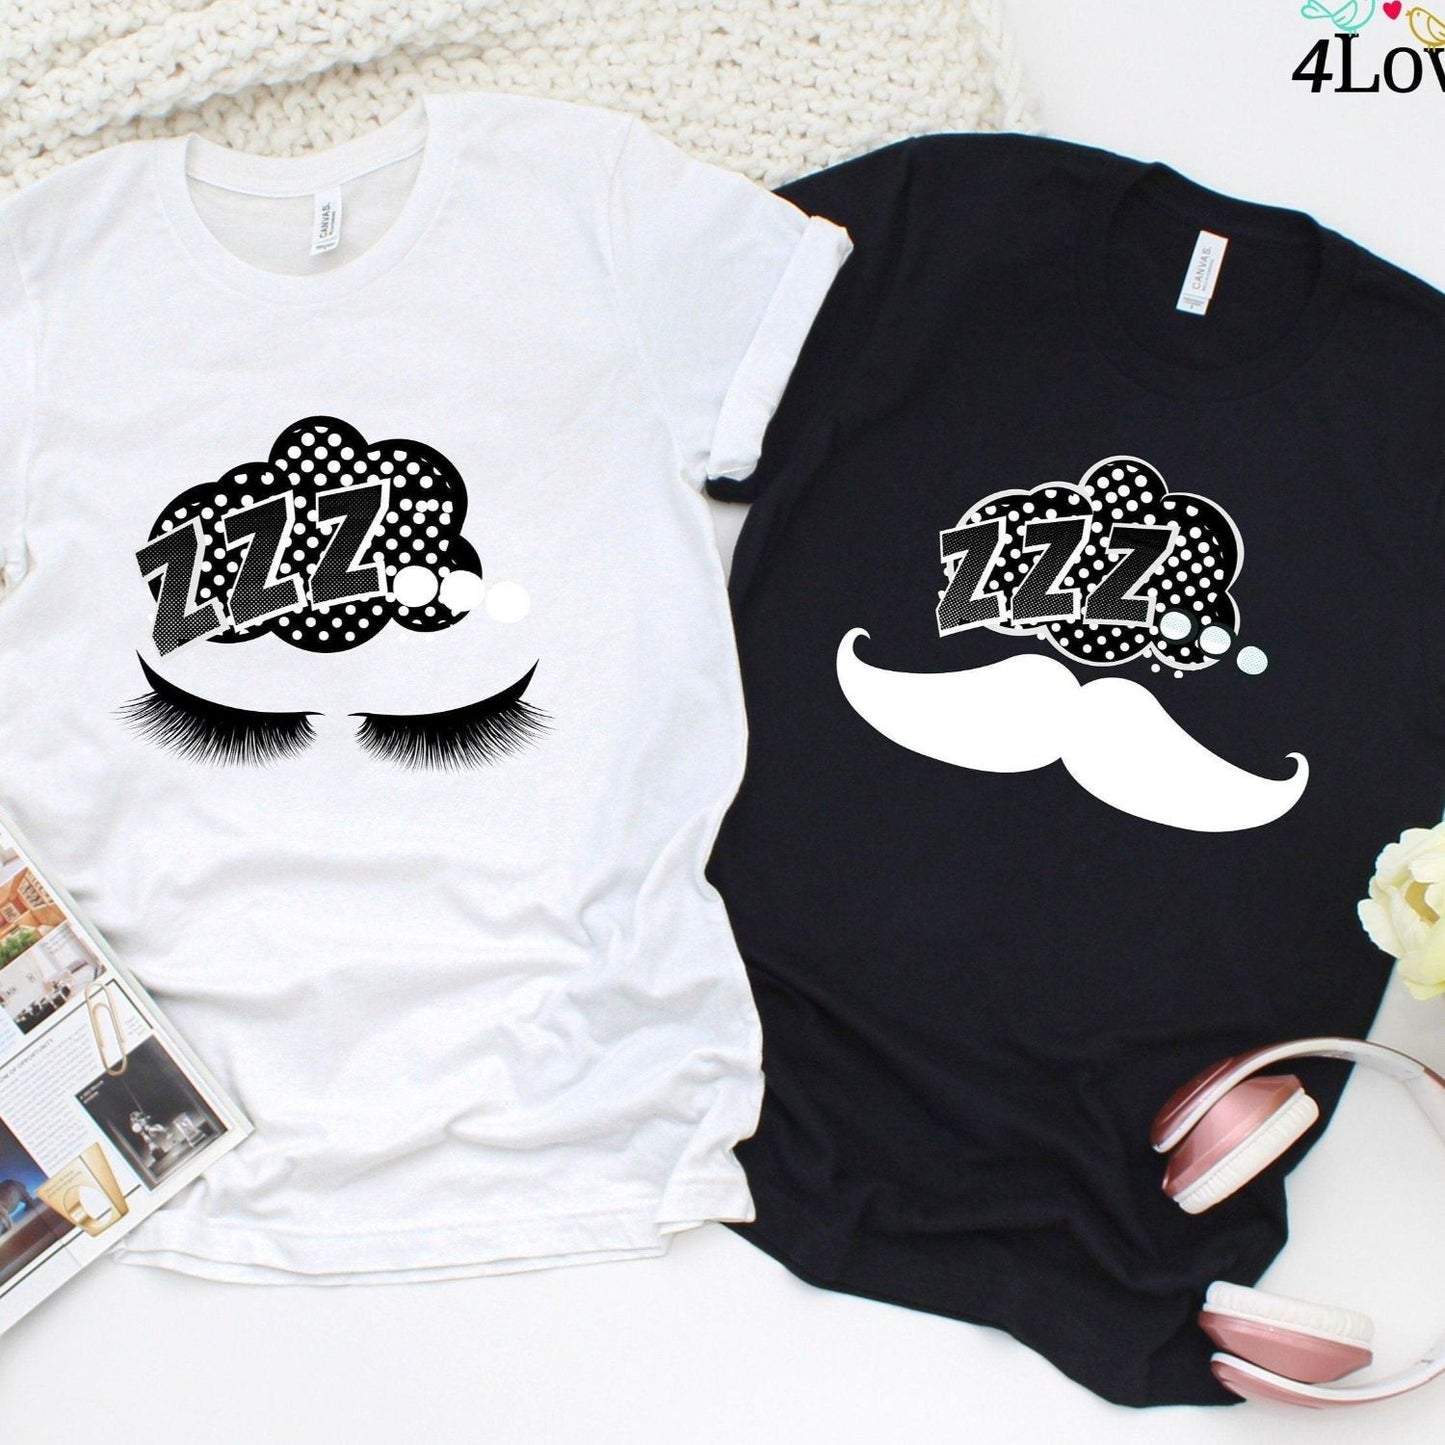 Adorable Mustache & Eyelash Couple's Matching Set - Ideal Anniversary Gift